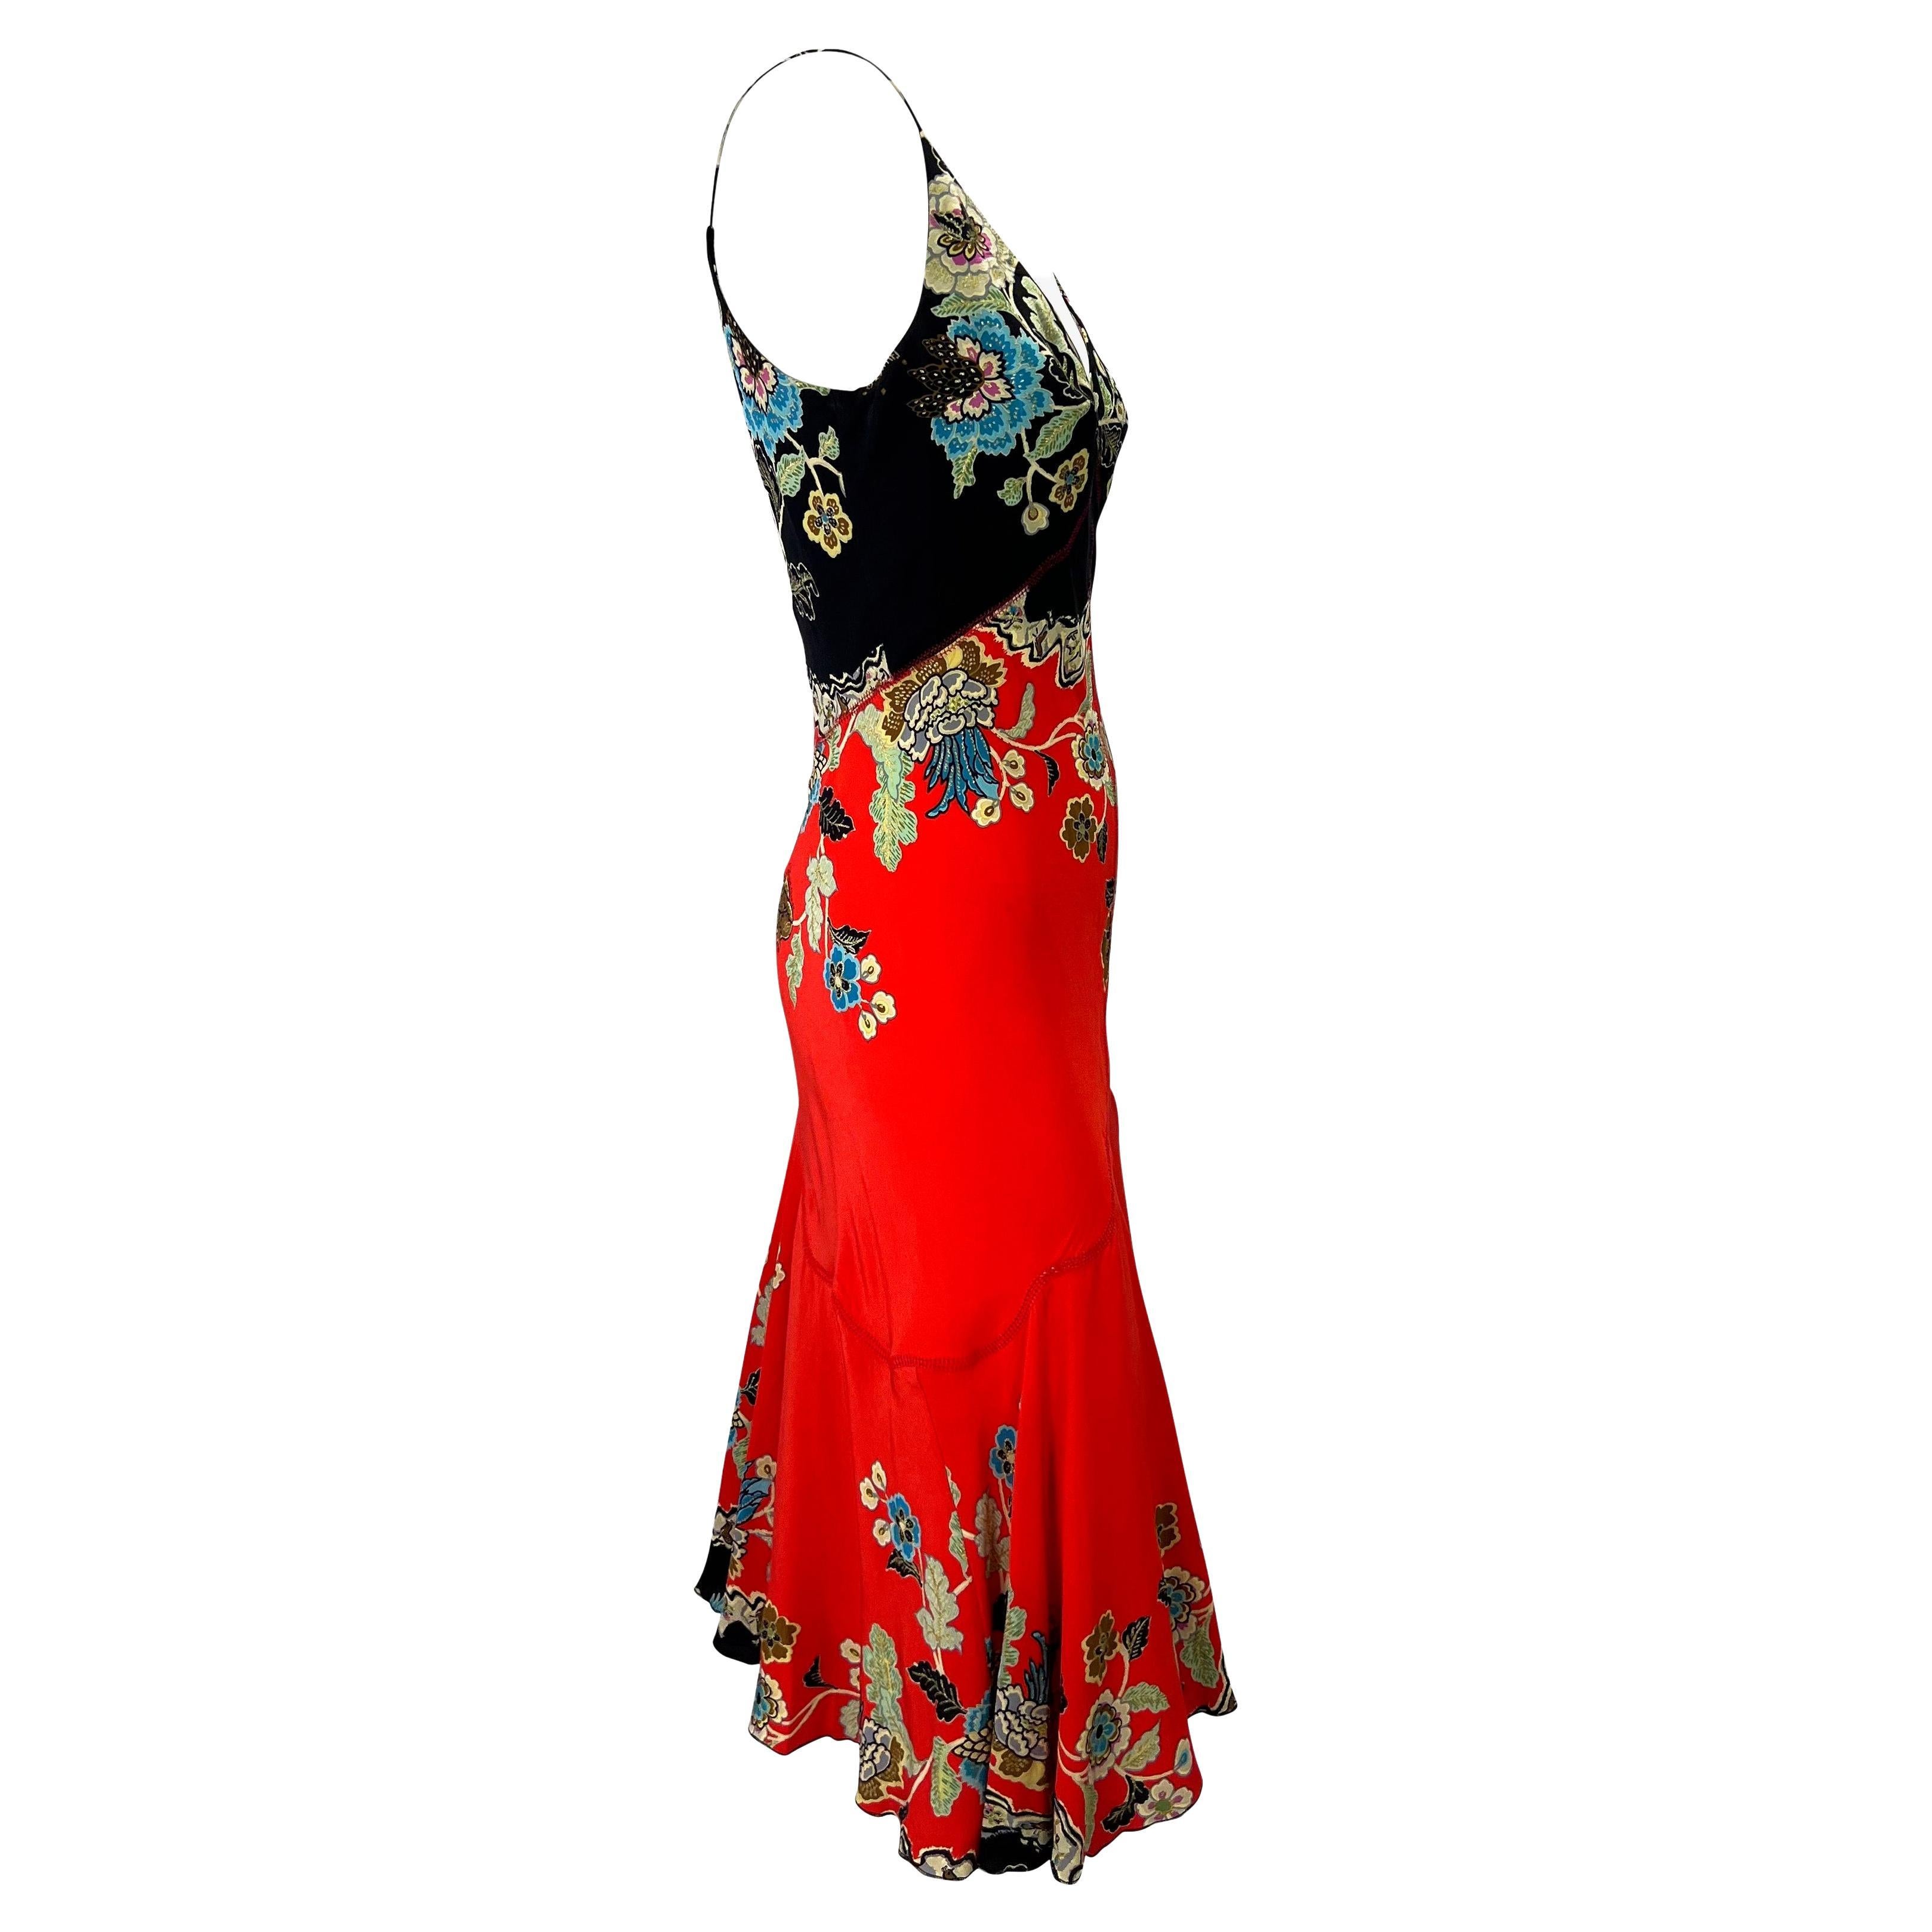 S/S 2003 Roberto Cavalli Red Chinoiserie Print Silk Slip Dress For Sale 2